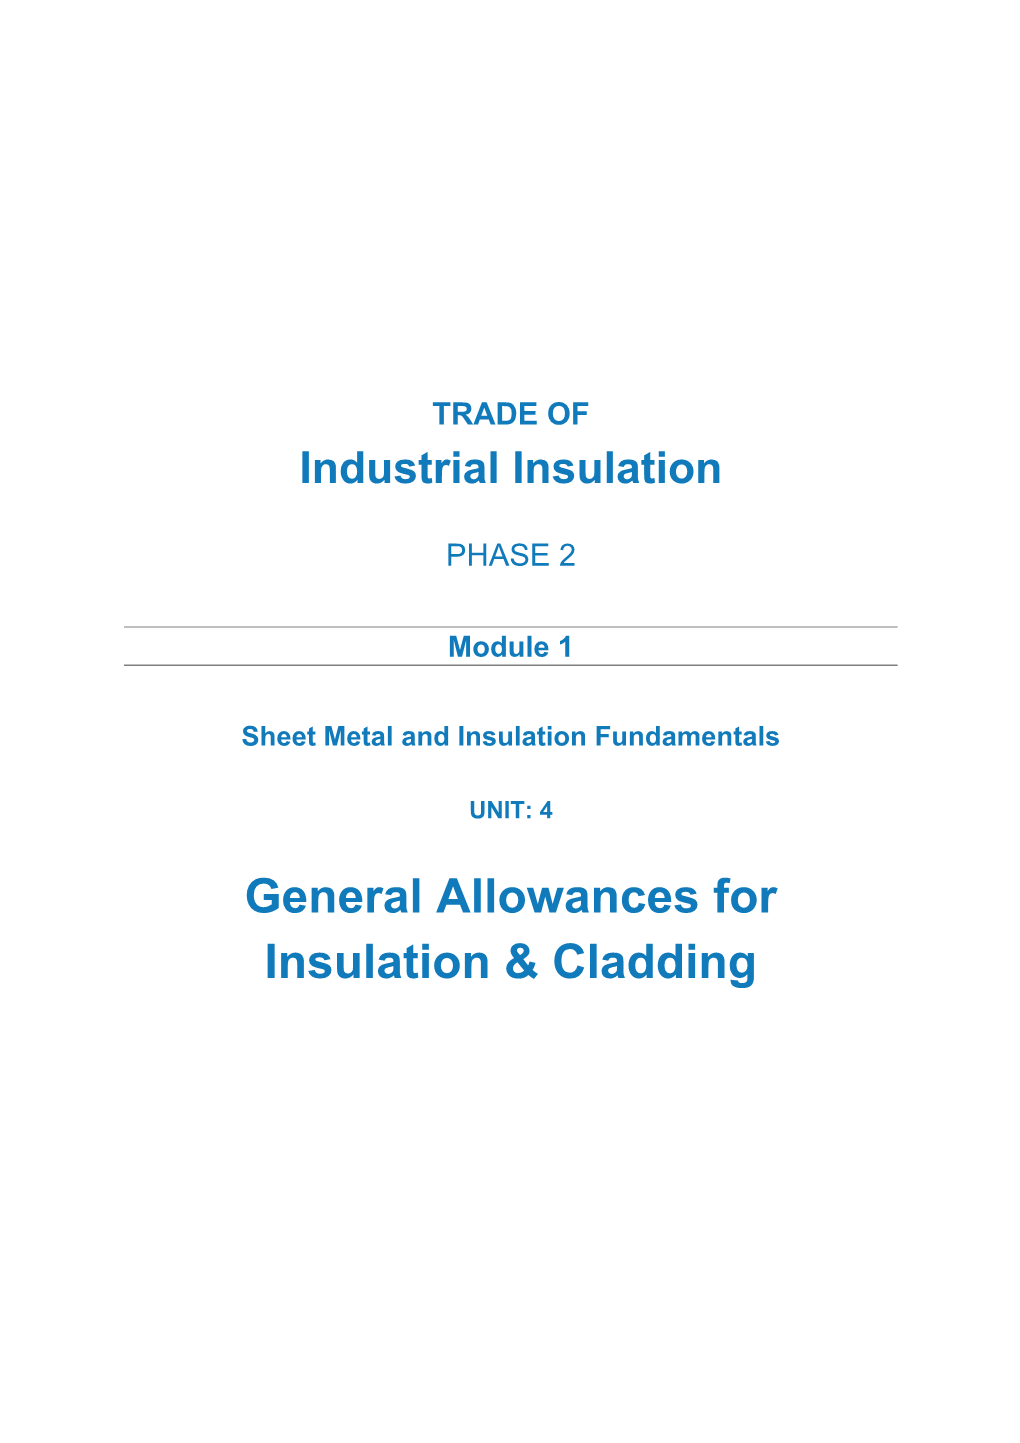 Sheet Metal and Insulation Fundamentals